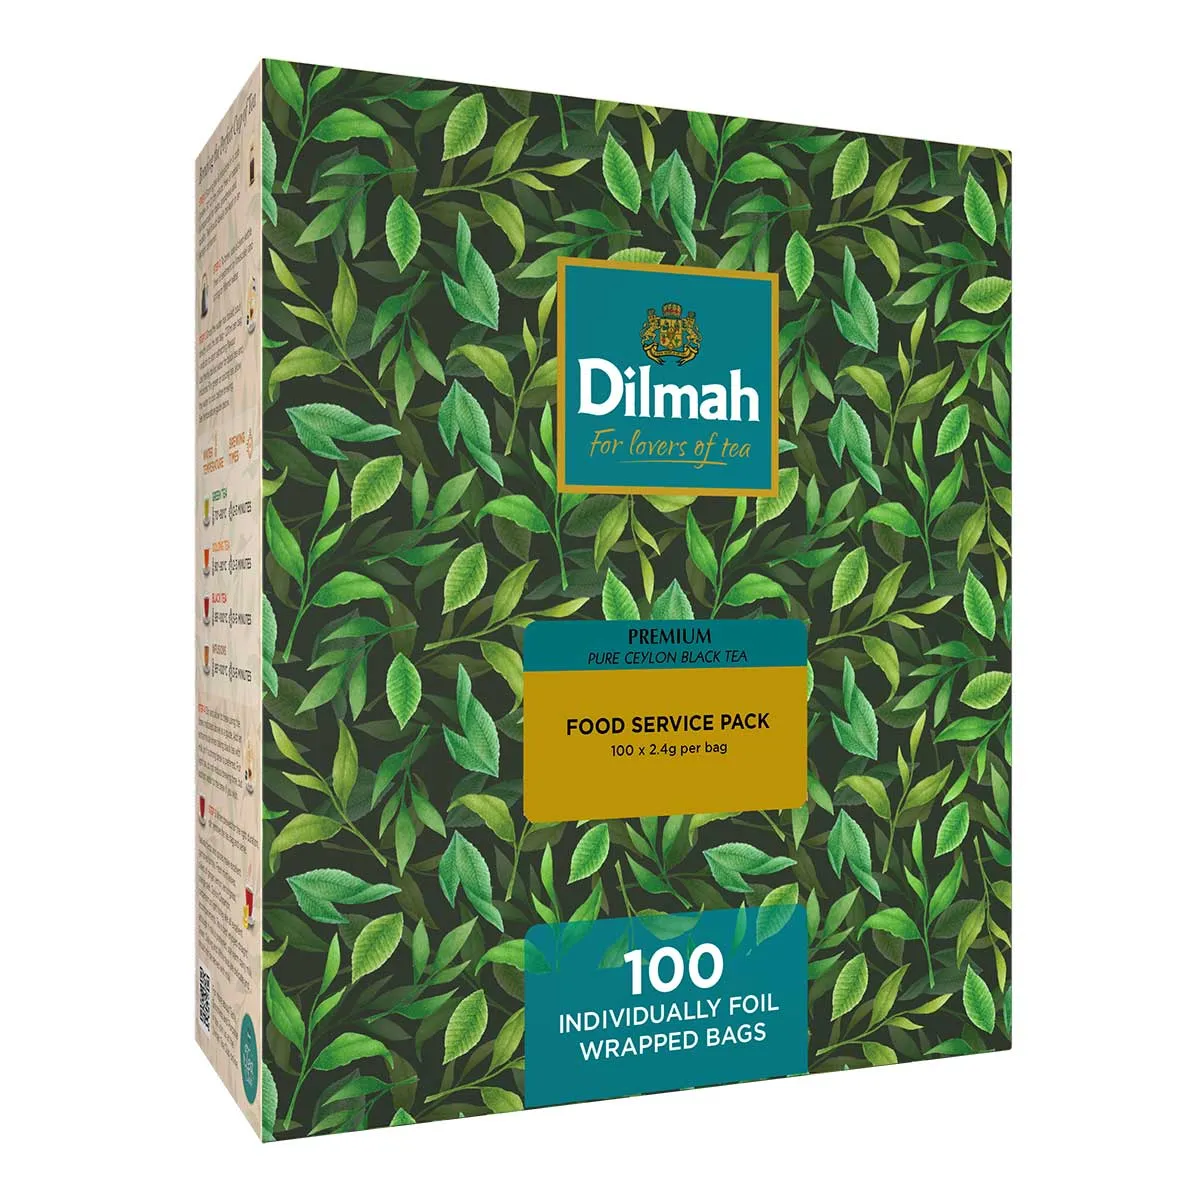 Pack of 100 individually wrapped tea bags of Premium Ceylon black tea